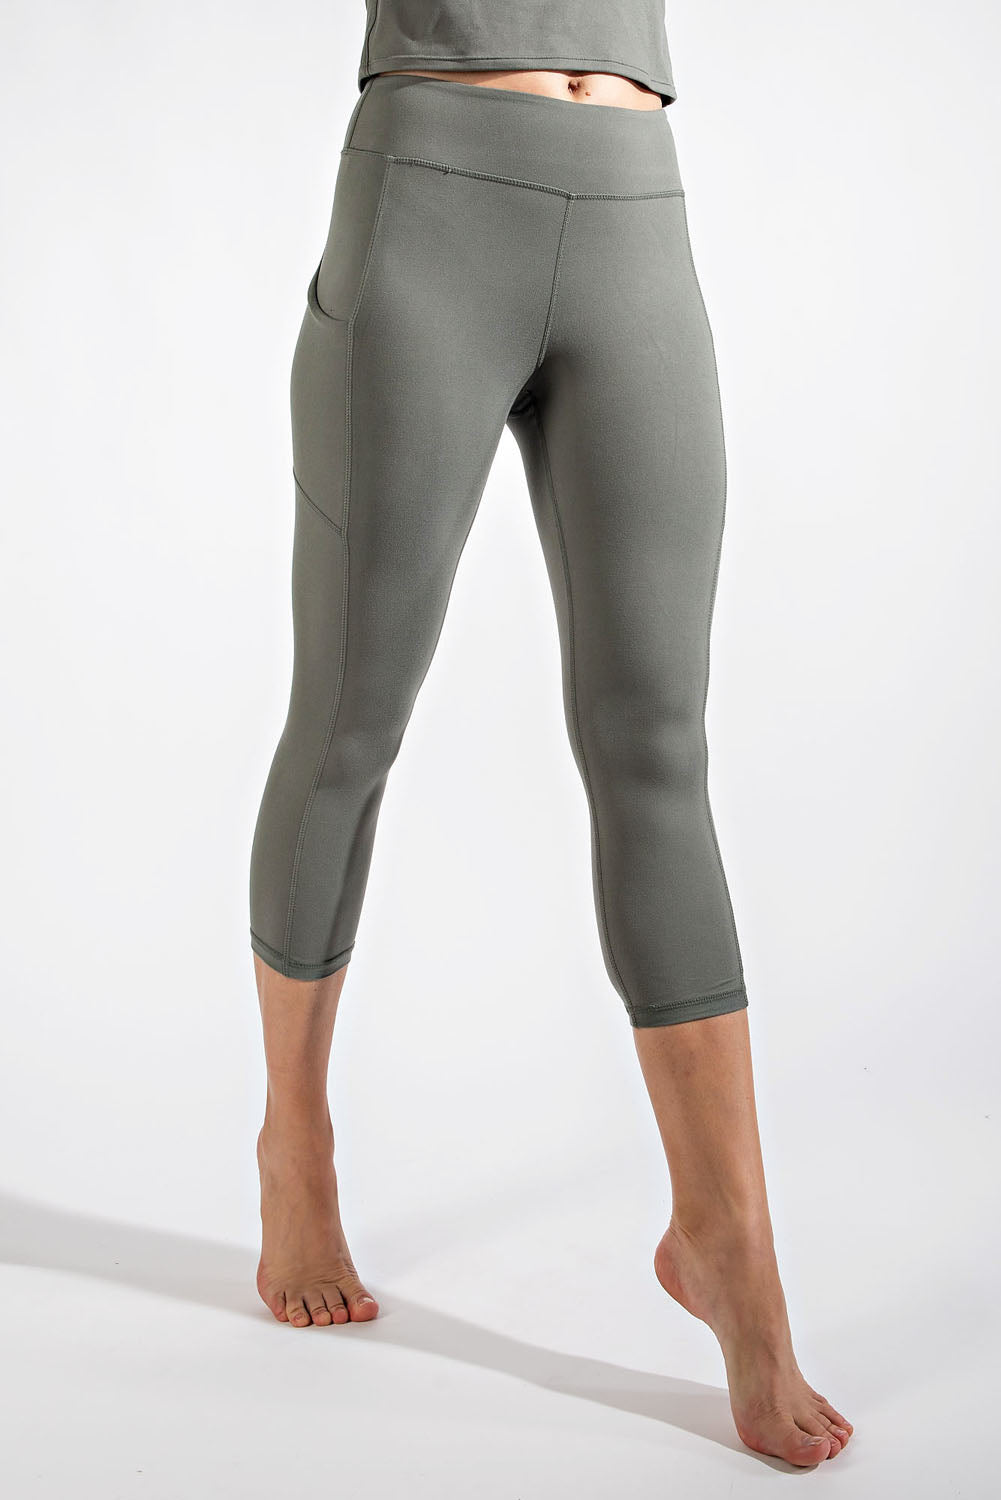 Buttery Soft Capri Leggings for Women - High Waisted Capri Pants with  Pockets - Reg & Plus Size - 10+ Colors